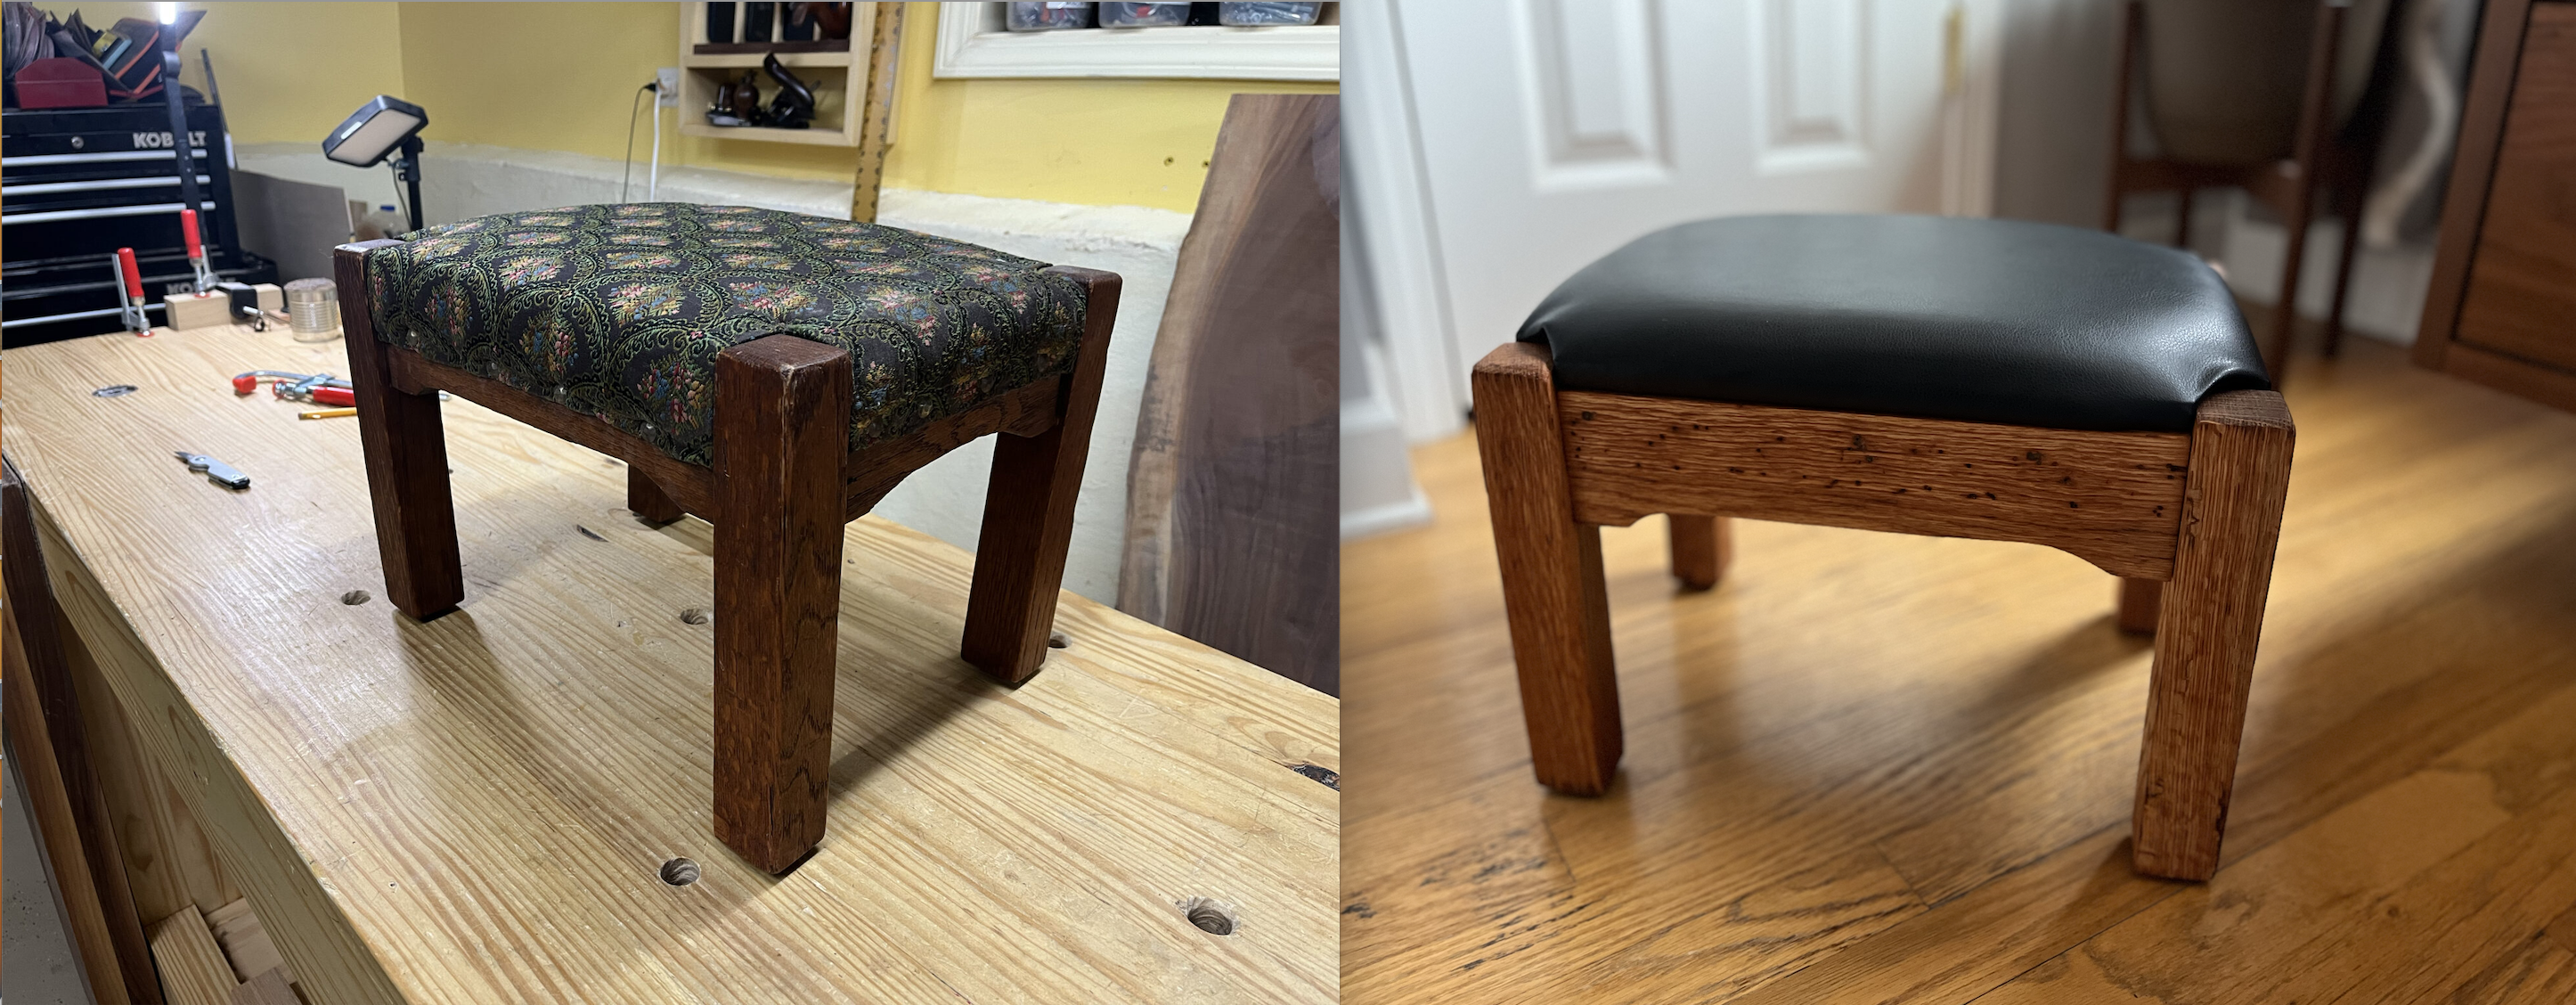 Restoring A Classic Wooden Footstool